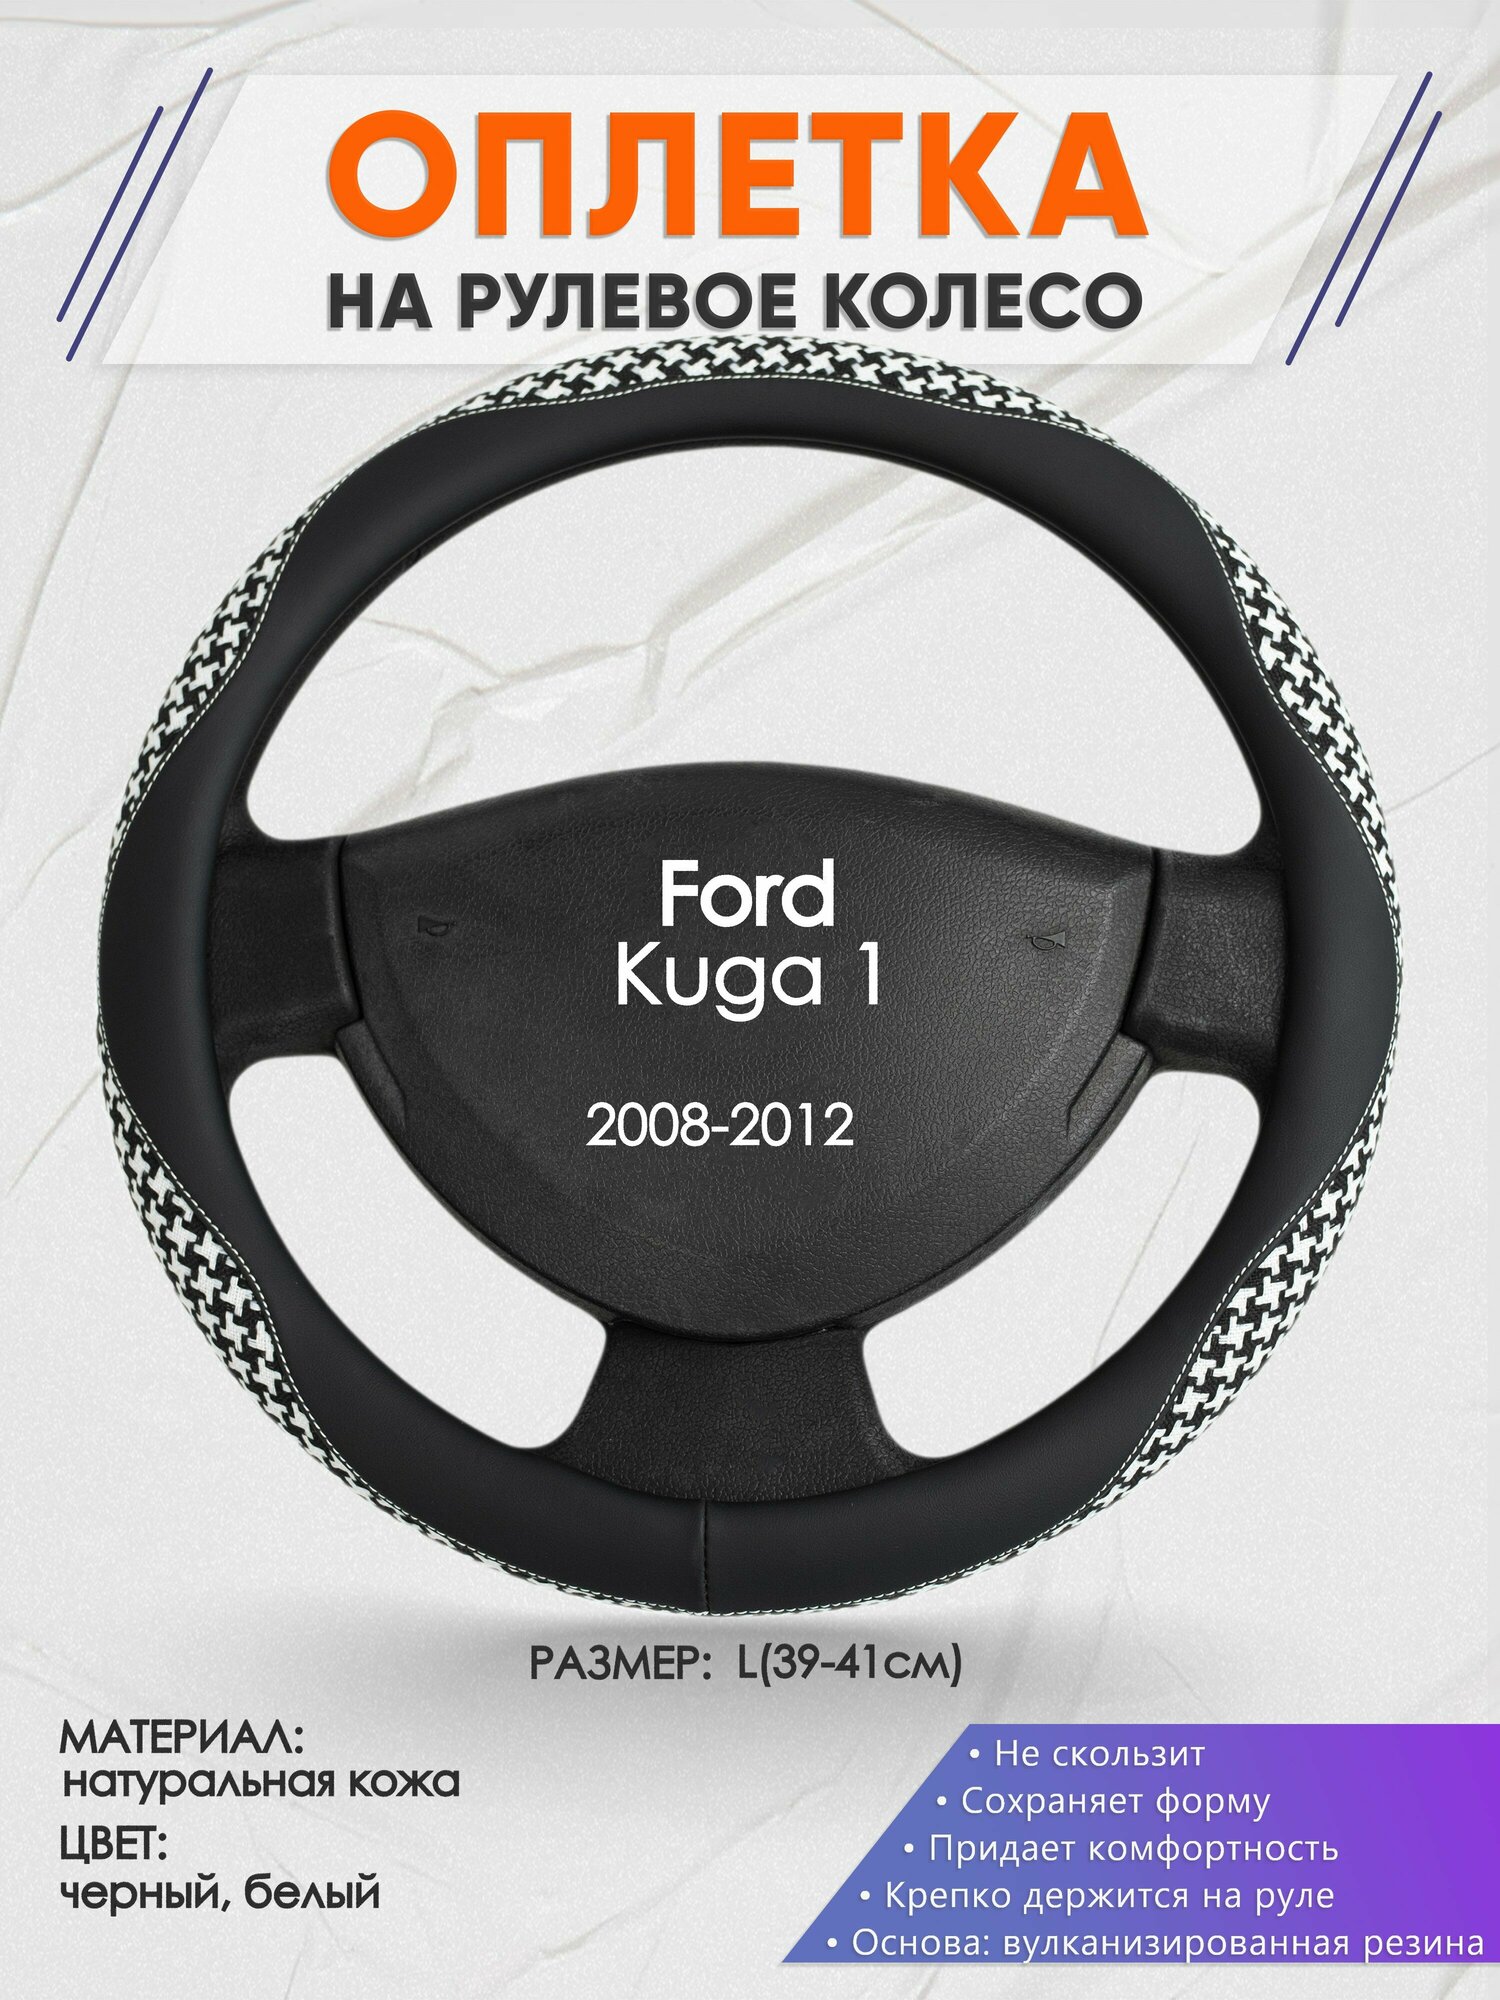 Оплетка на руль для Ford Kuga 1(Форд Куга 1) 2008-2012, L(39-41см), Натуральная кожа 21